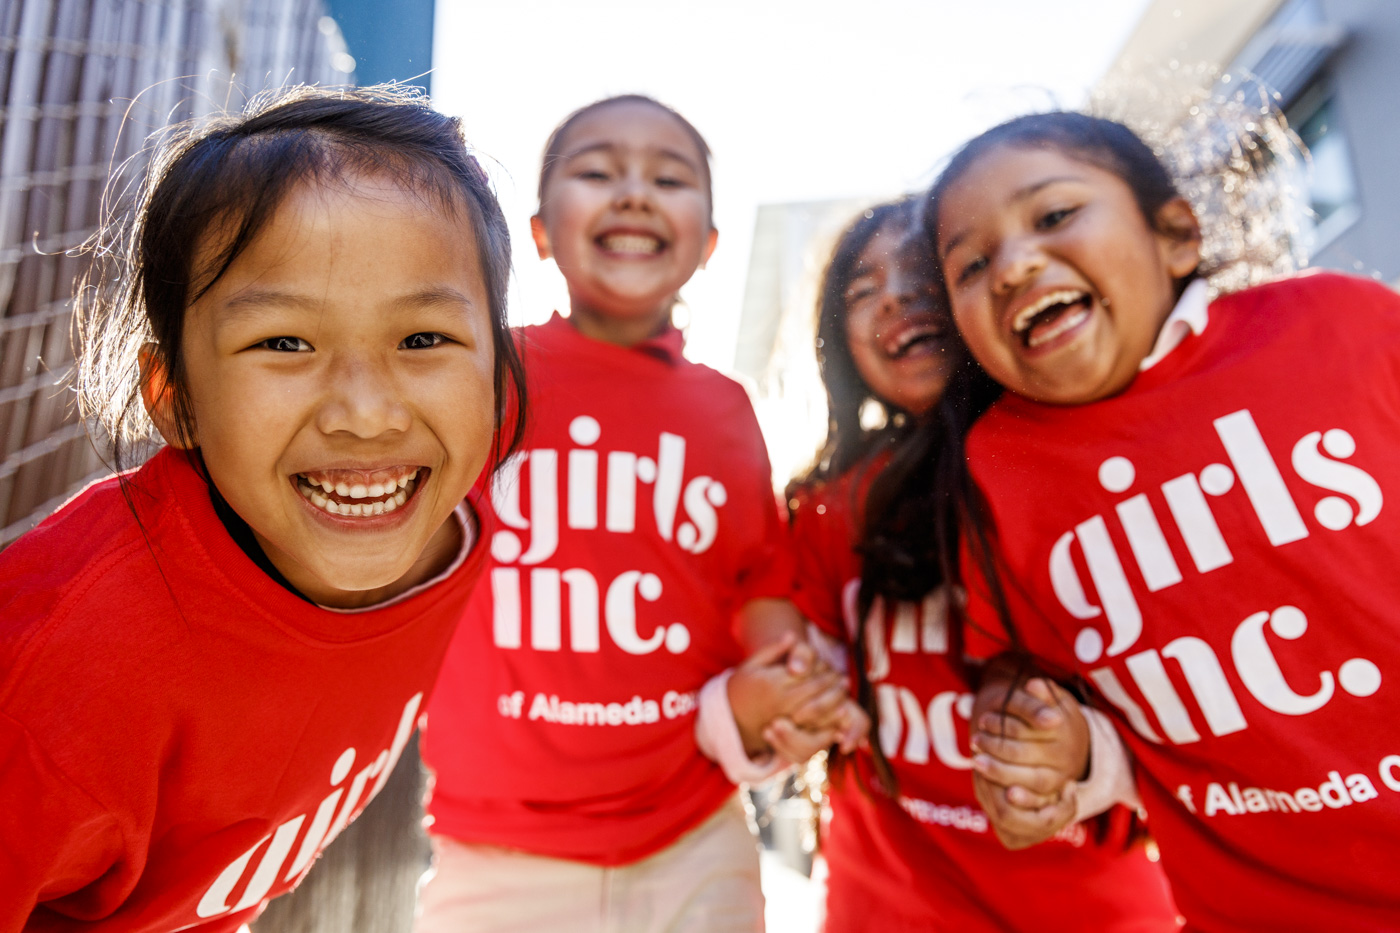 Invest In Girls Inc Girls Inc Of Alameda County Girls Inc Of Alameda County 9247